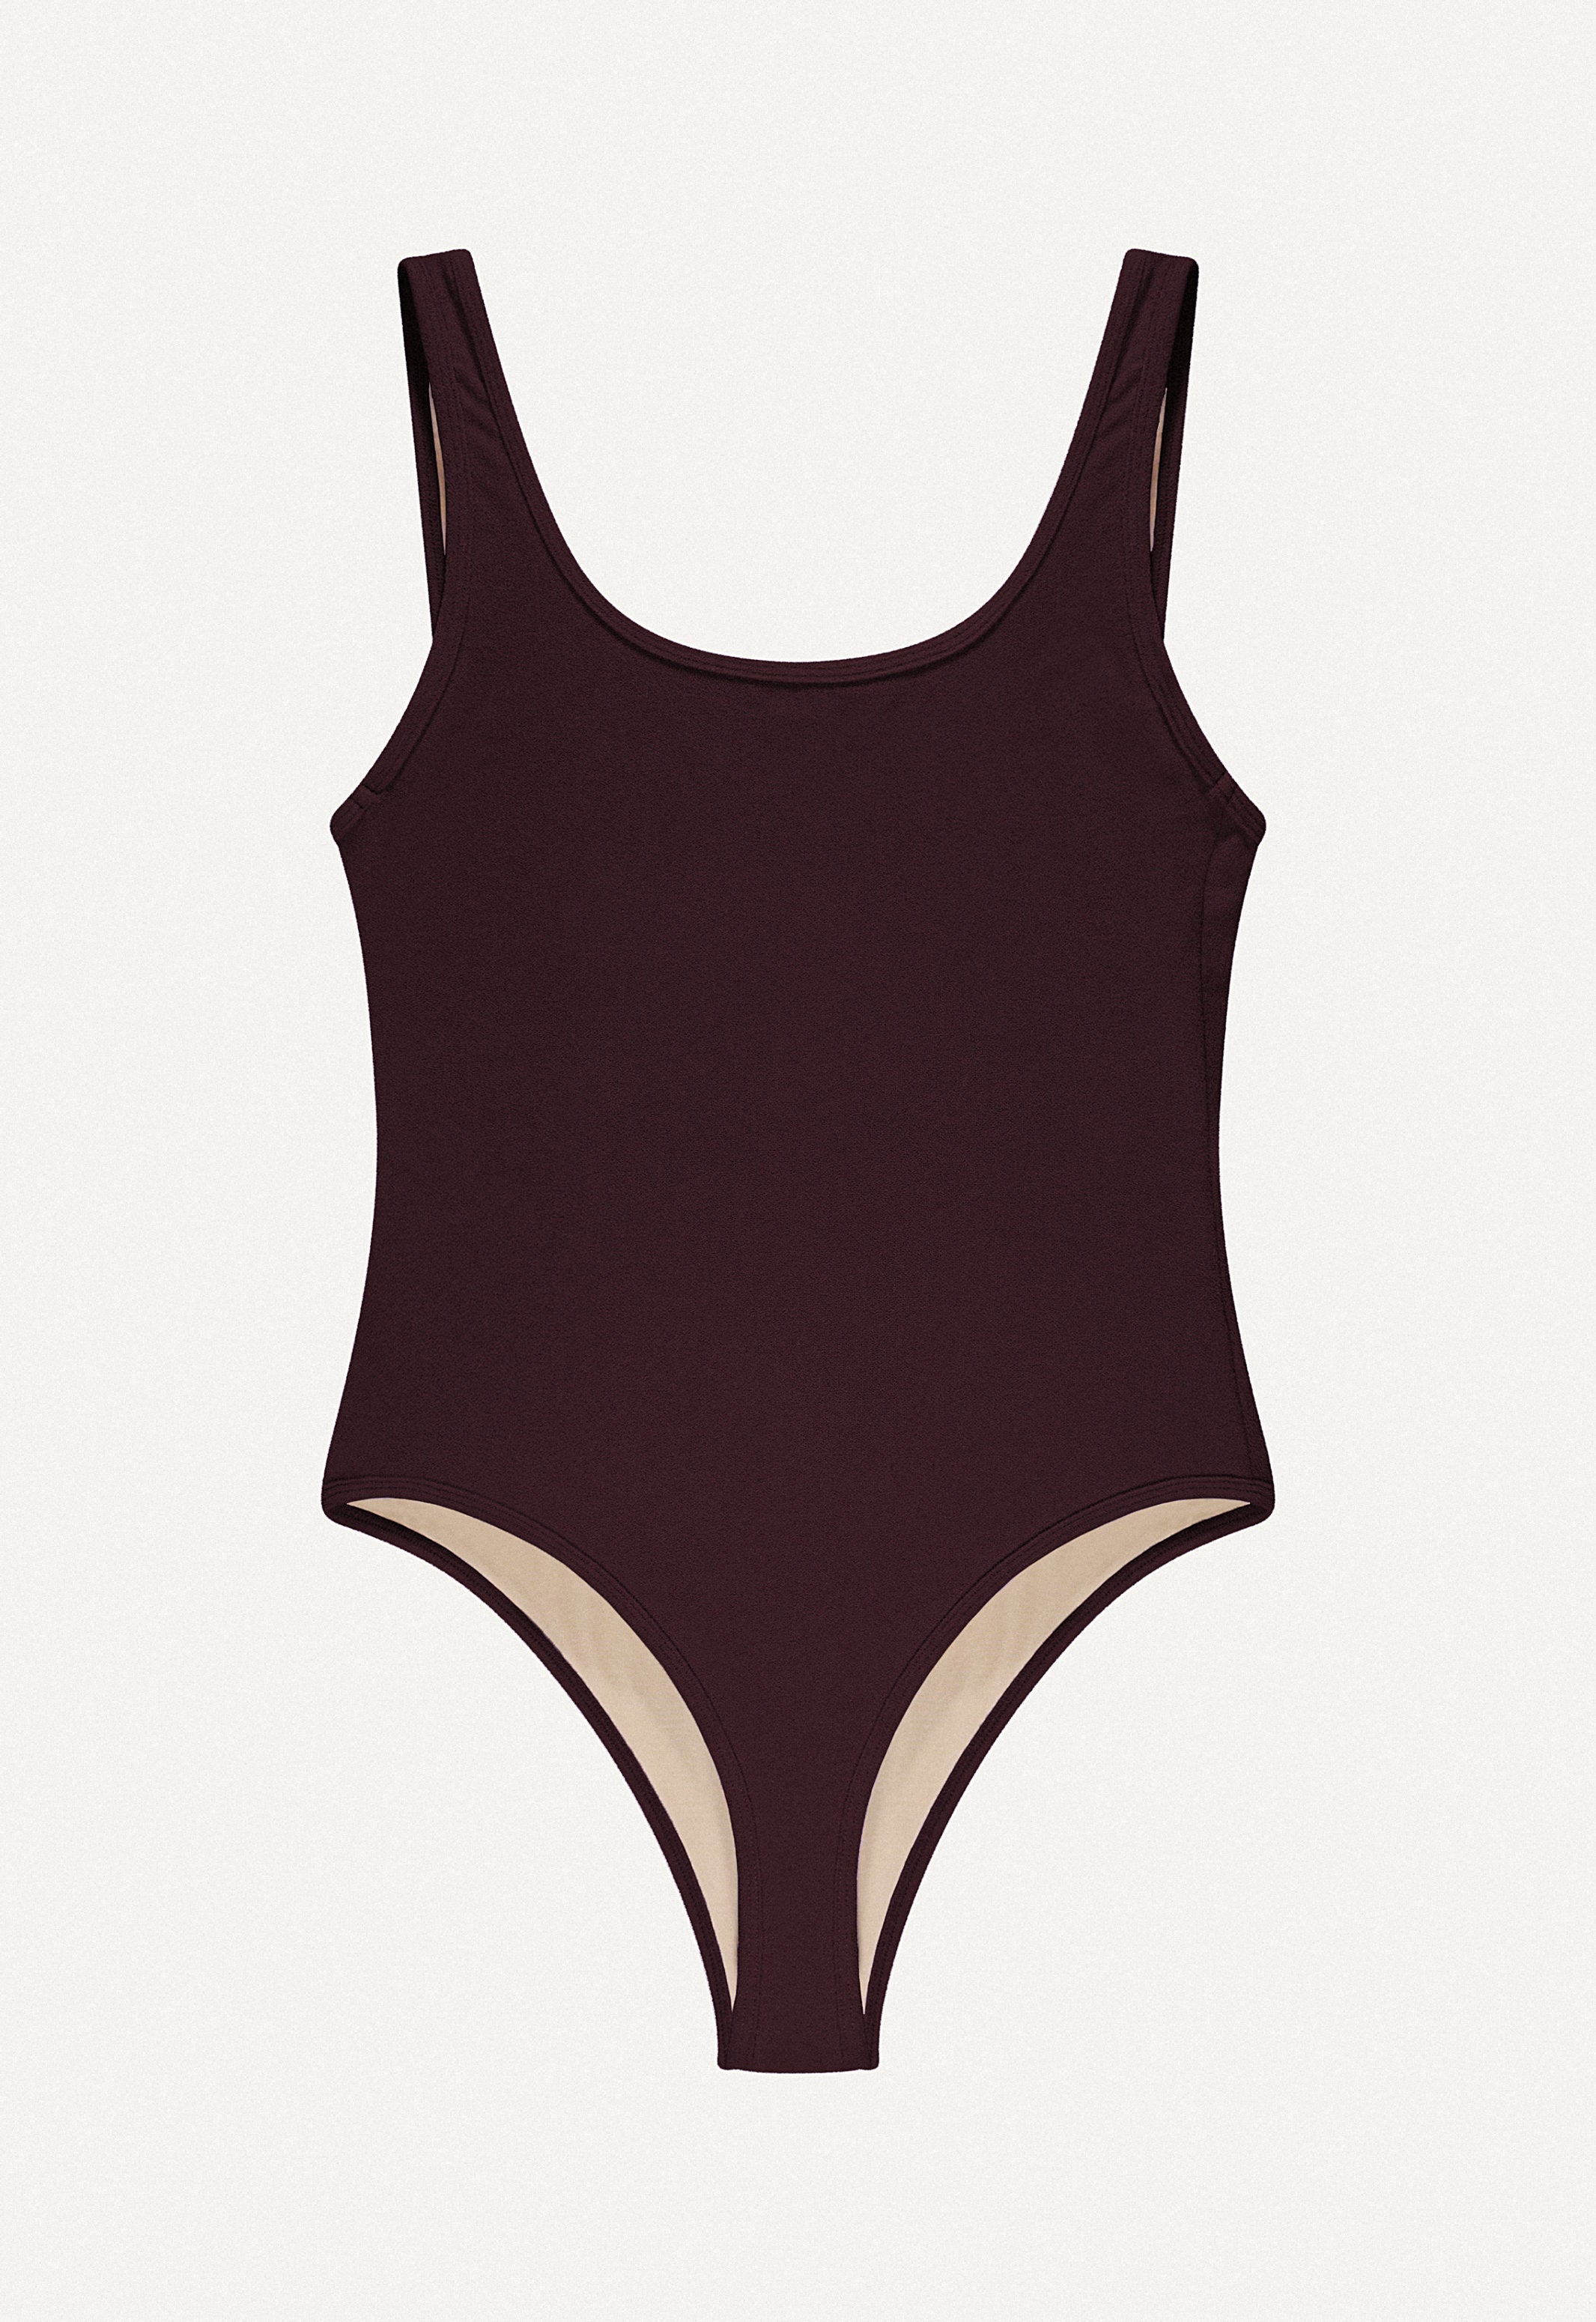 Surf Swimsuit "Zephyr" in dark brown terry